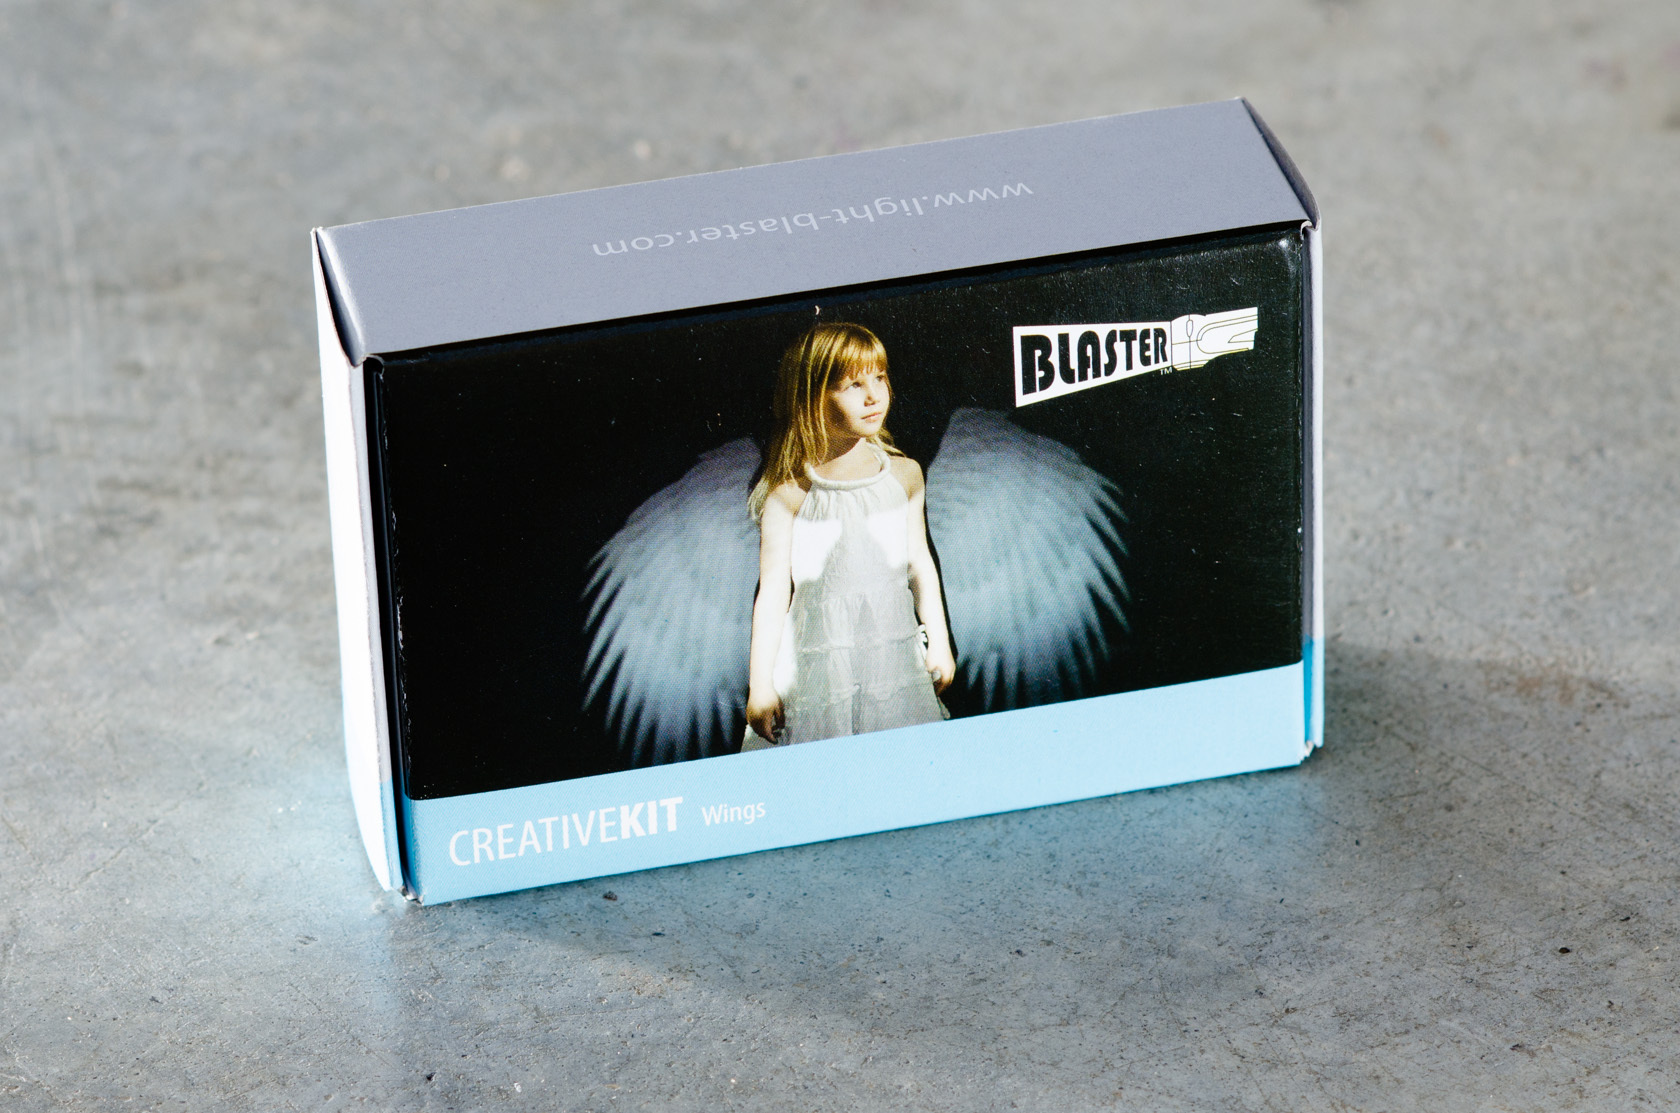 Spekular Blaster Creative Kit Wings